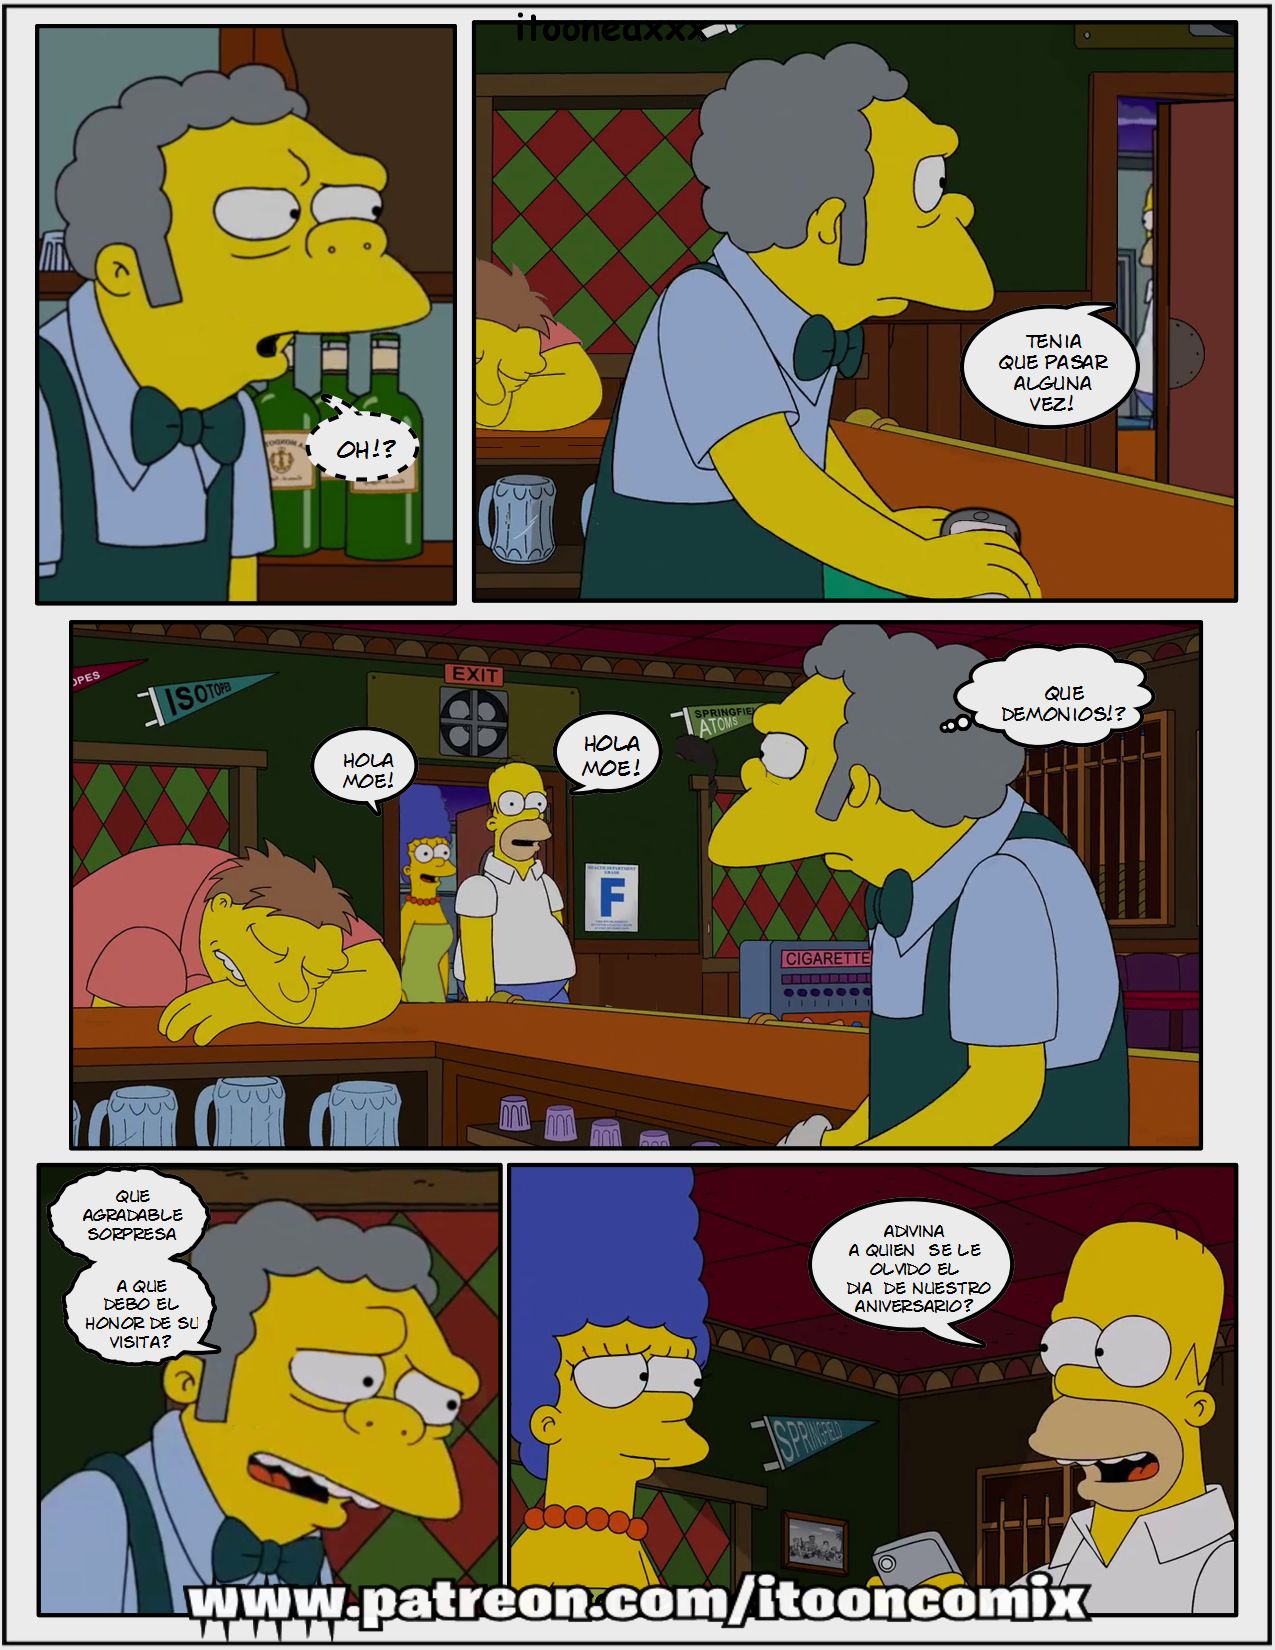 Simpsons Porn Fan Fiction - Simpsons xxx - Expulsado 2 - Page 8 - IMHentai